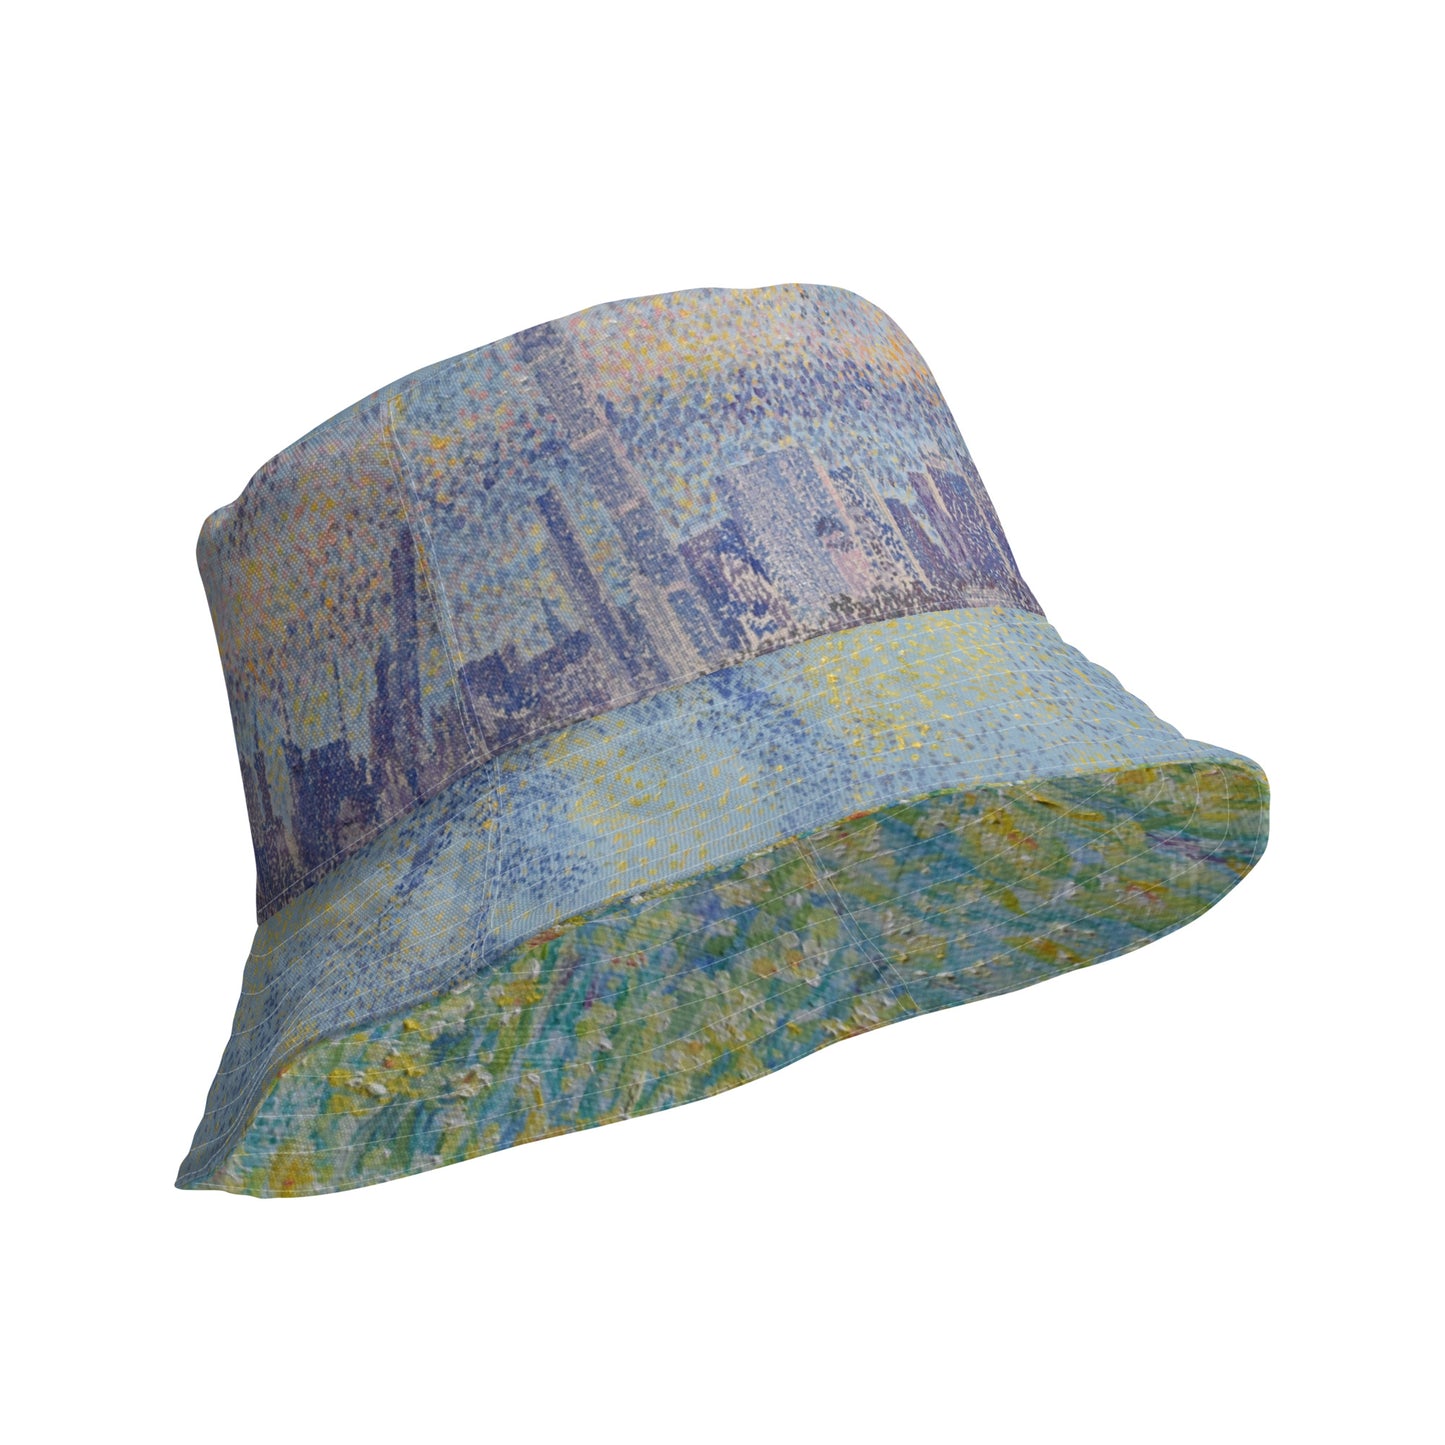 Central Park Views: Reversible bucket hat